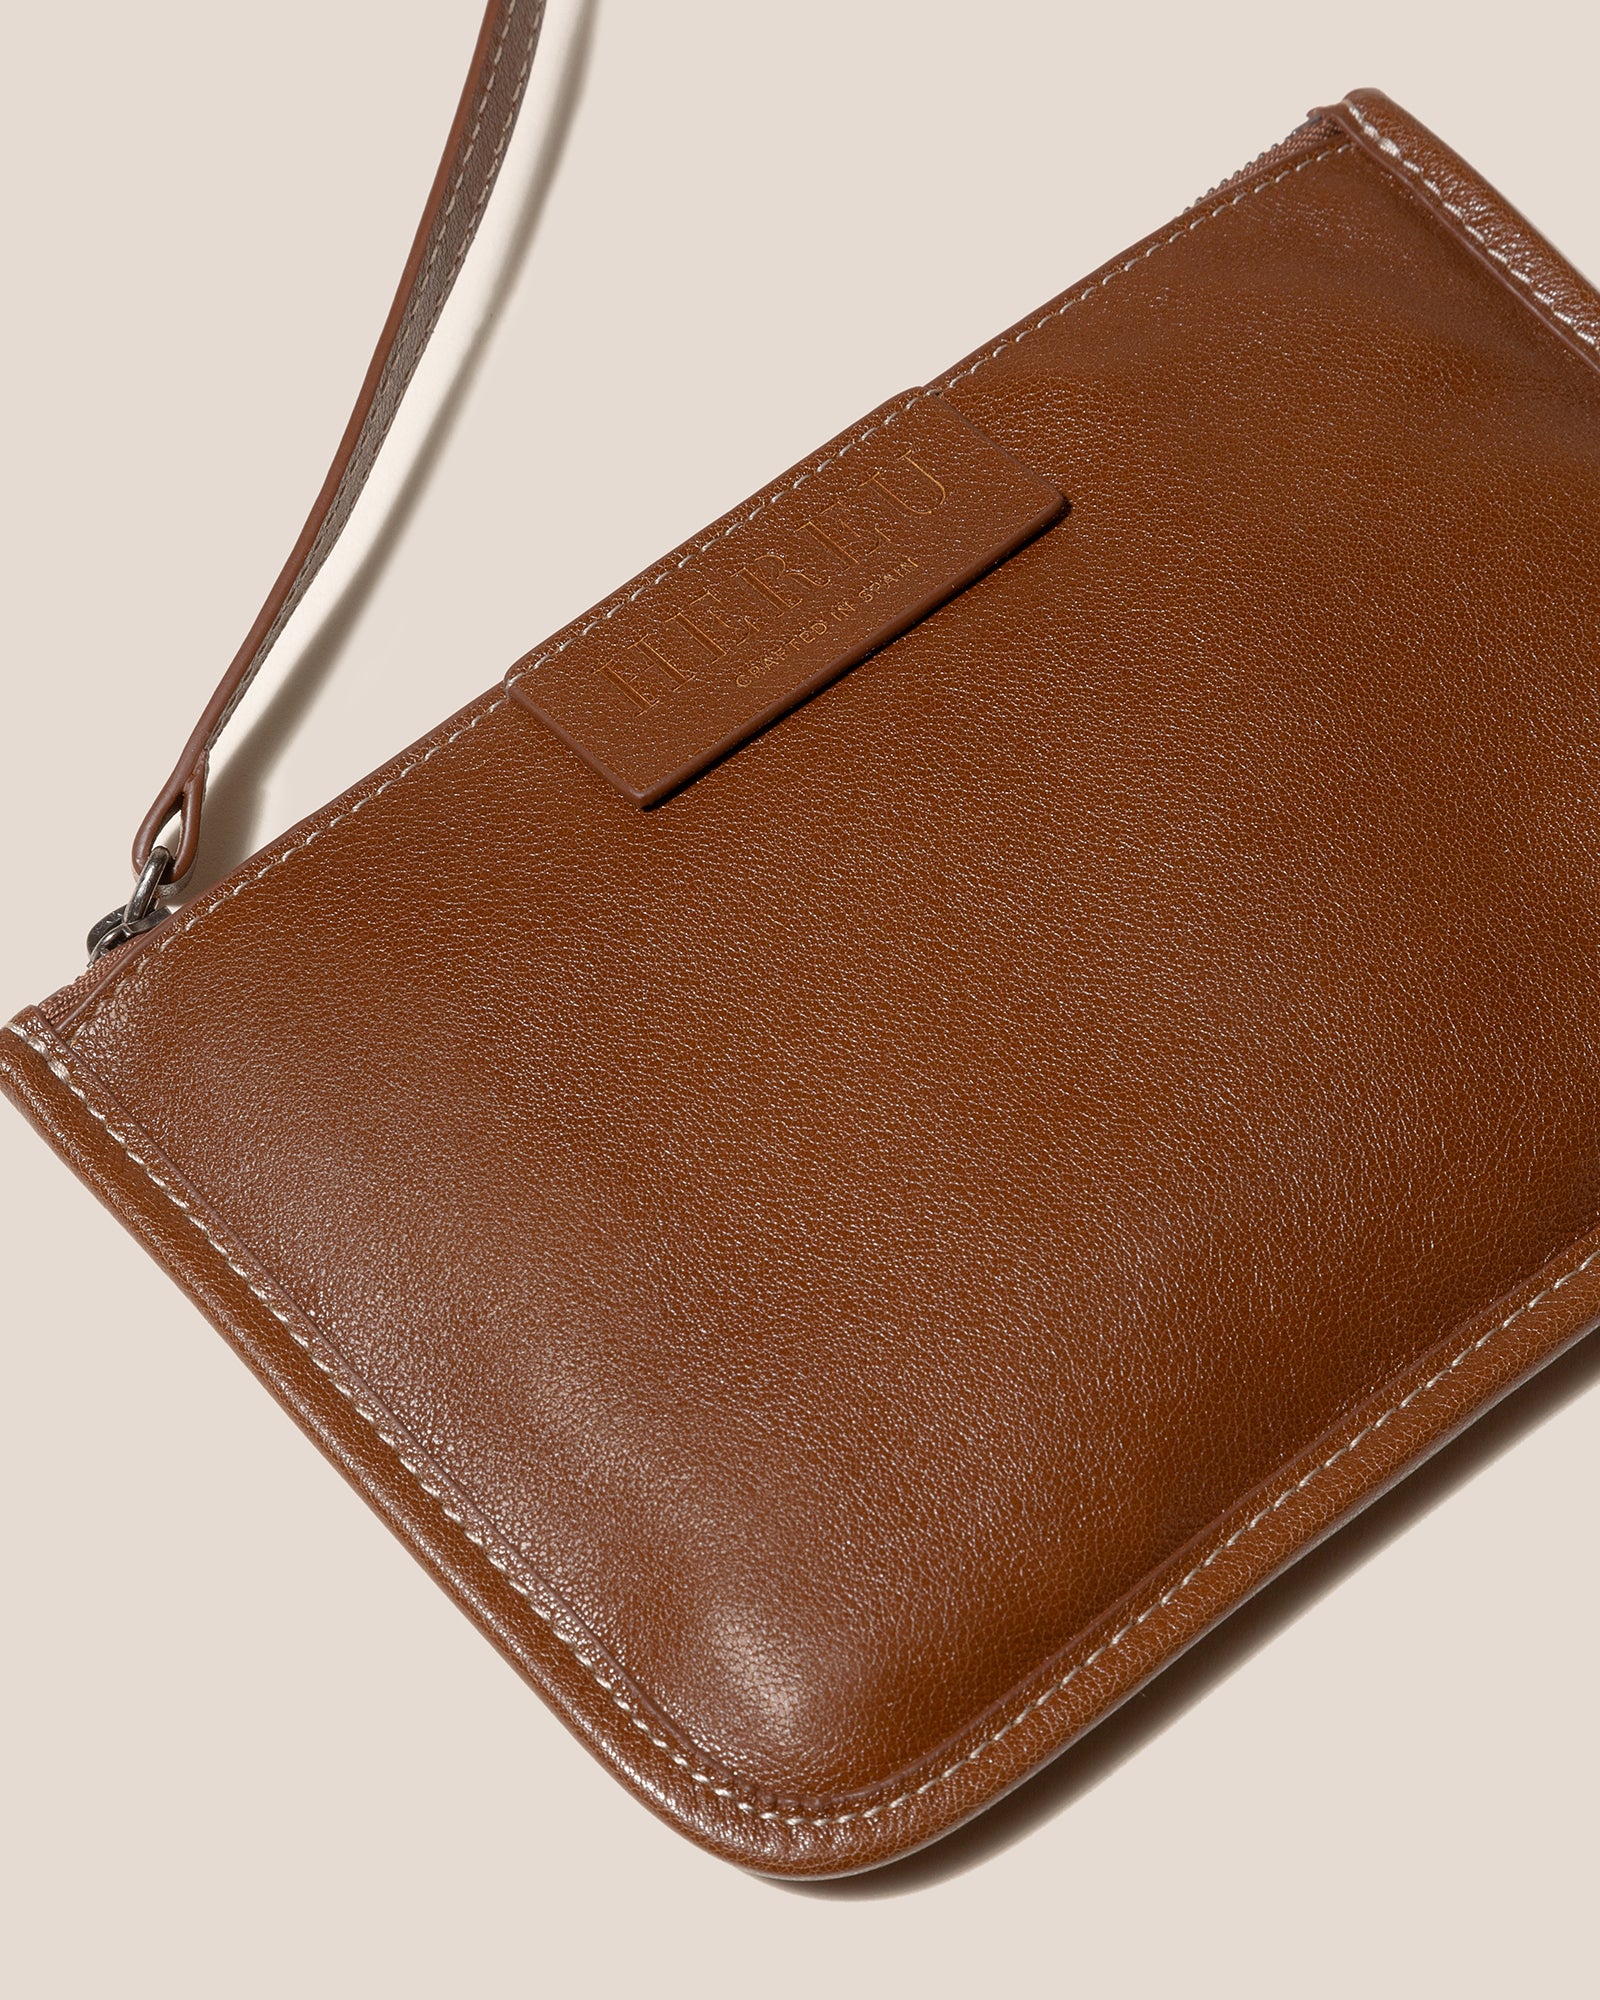 Calella Bag in Beige Leather